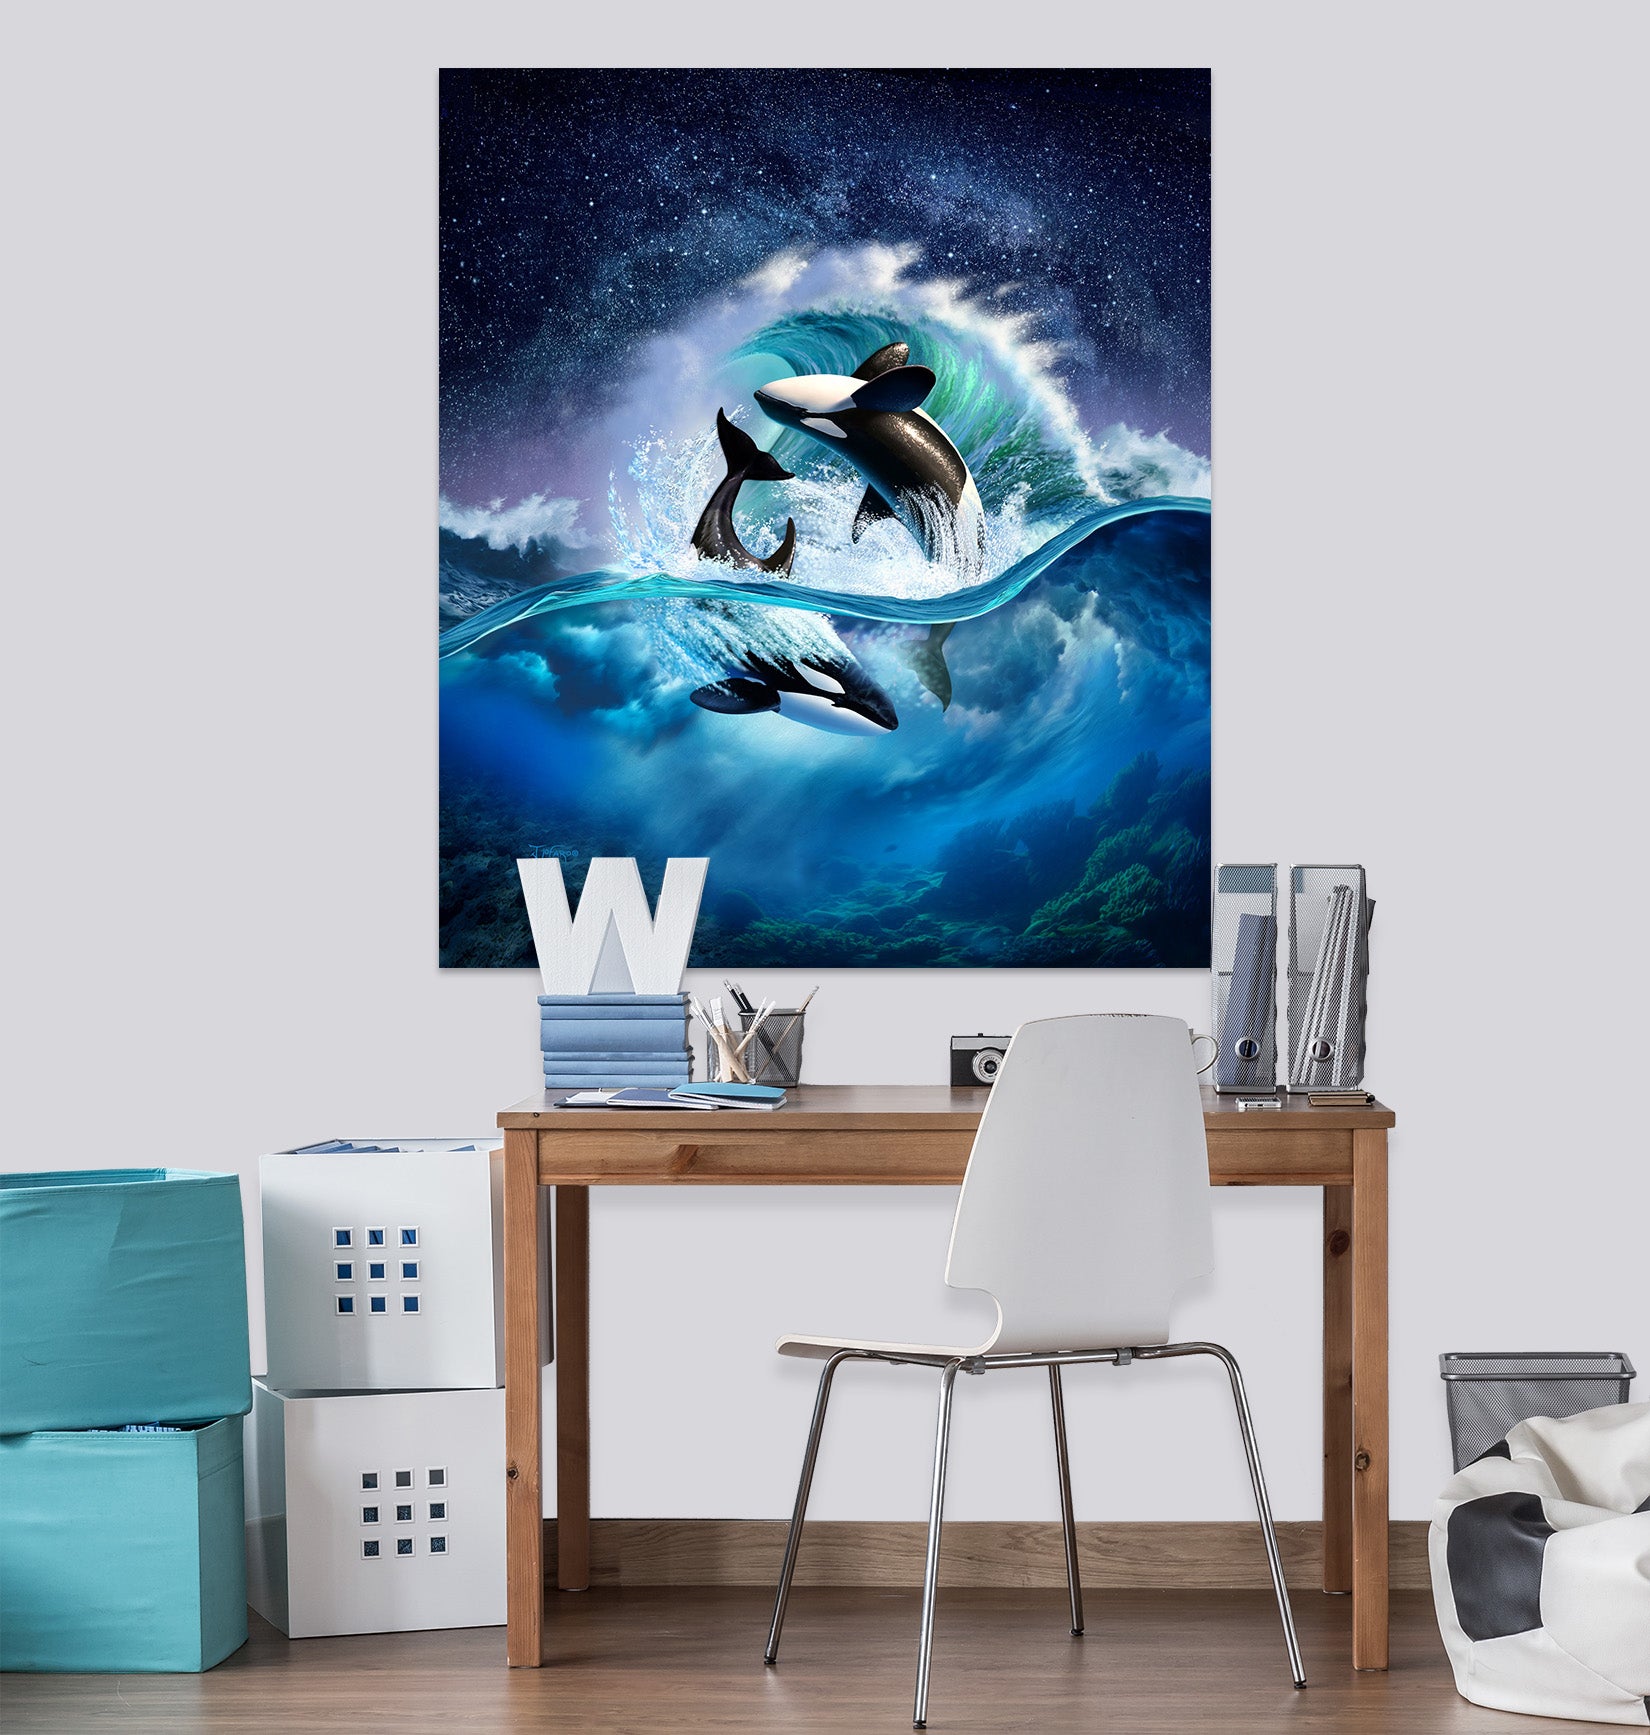 3D Orca Wave 017 Jerry LoFaro Wall Sticker